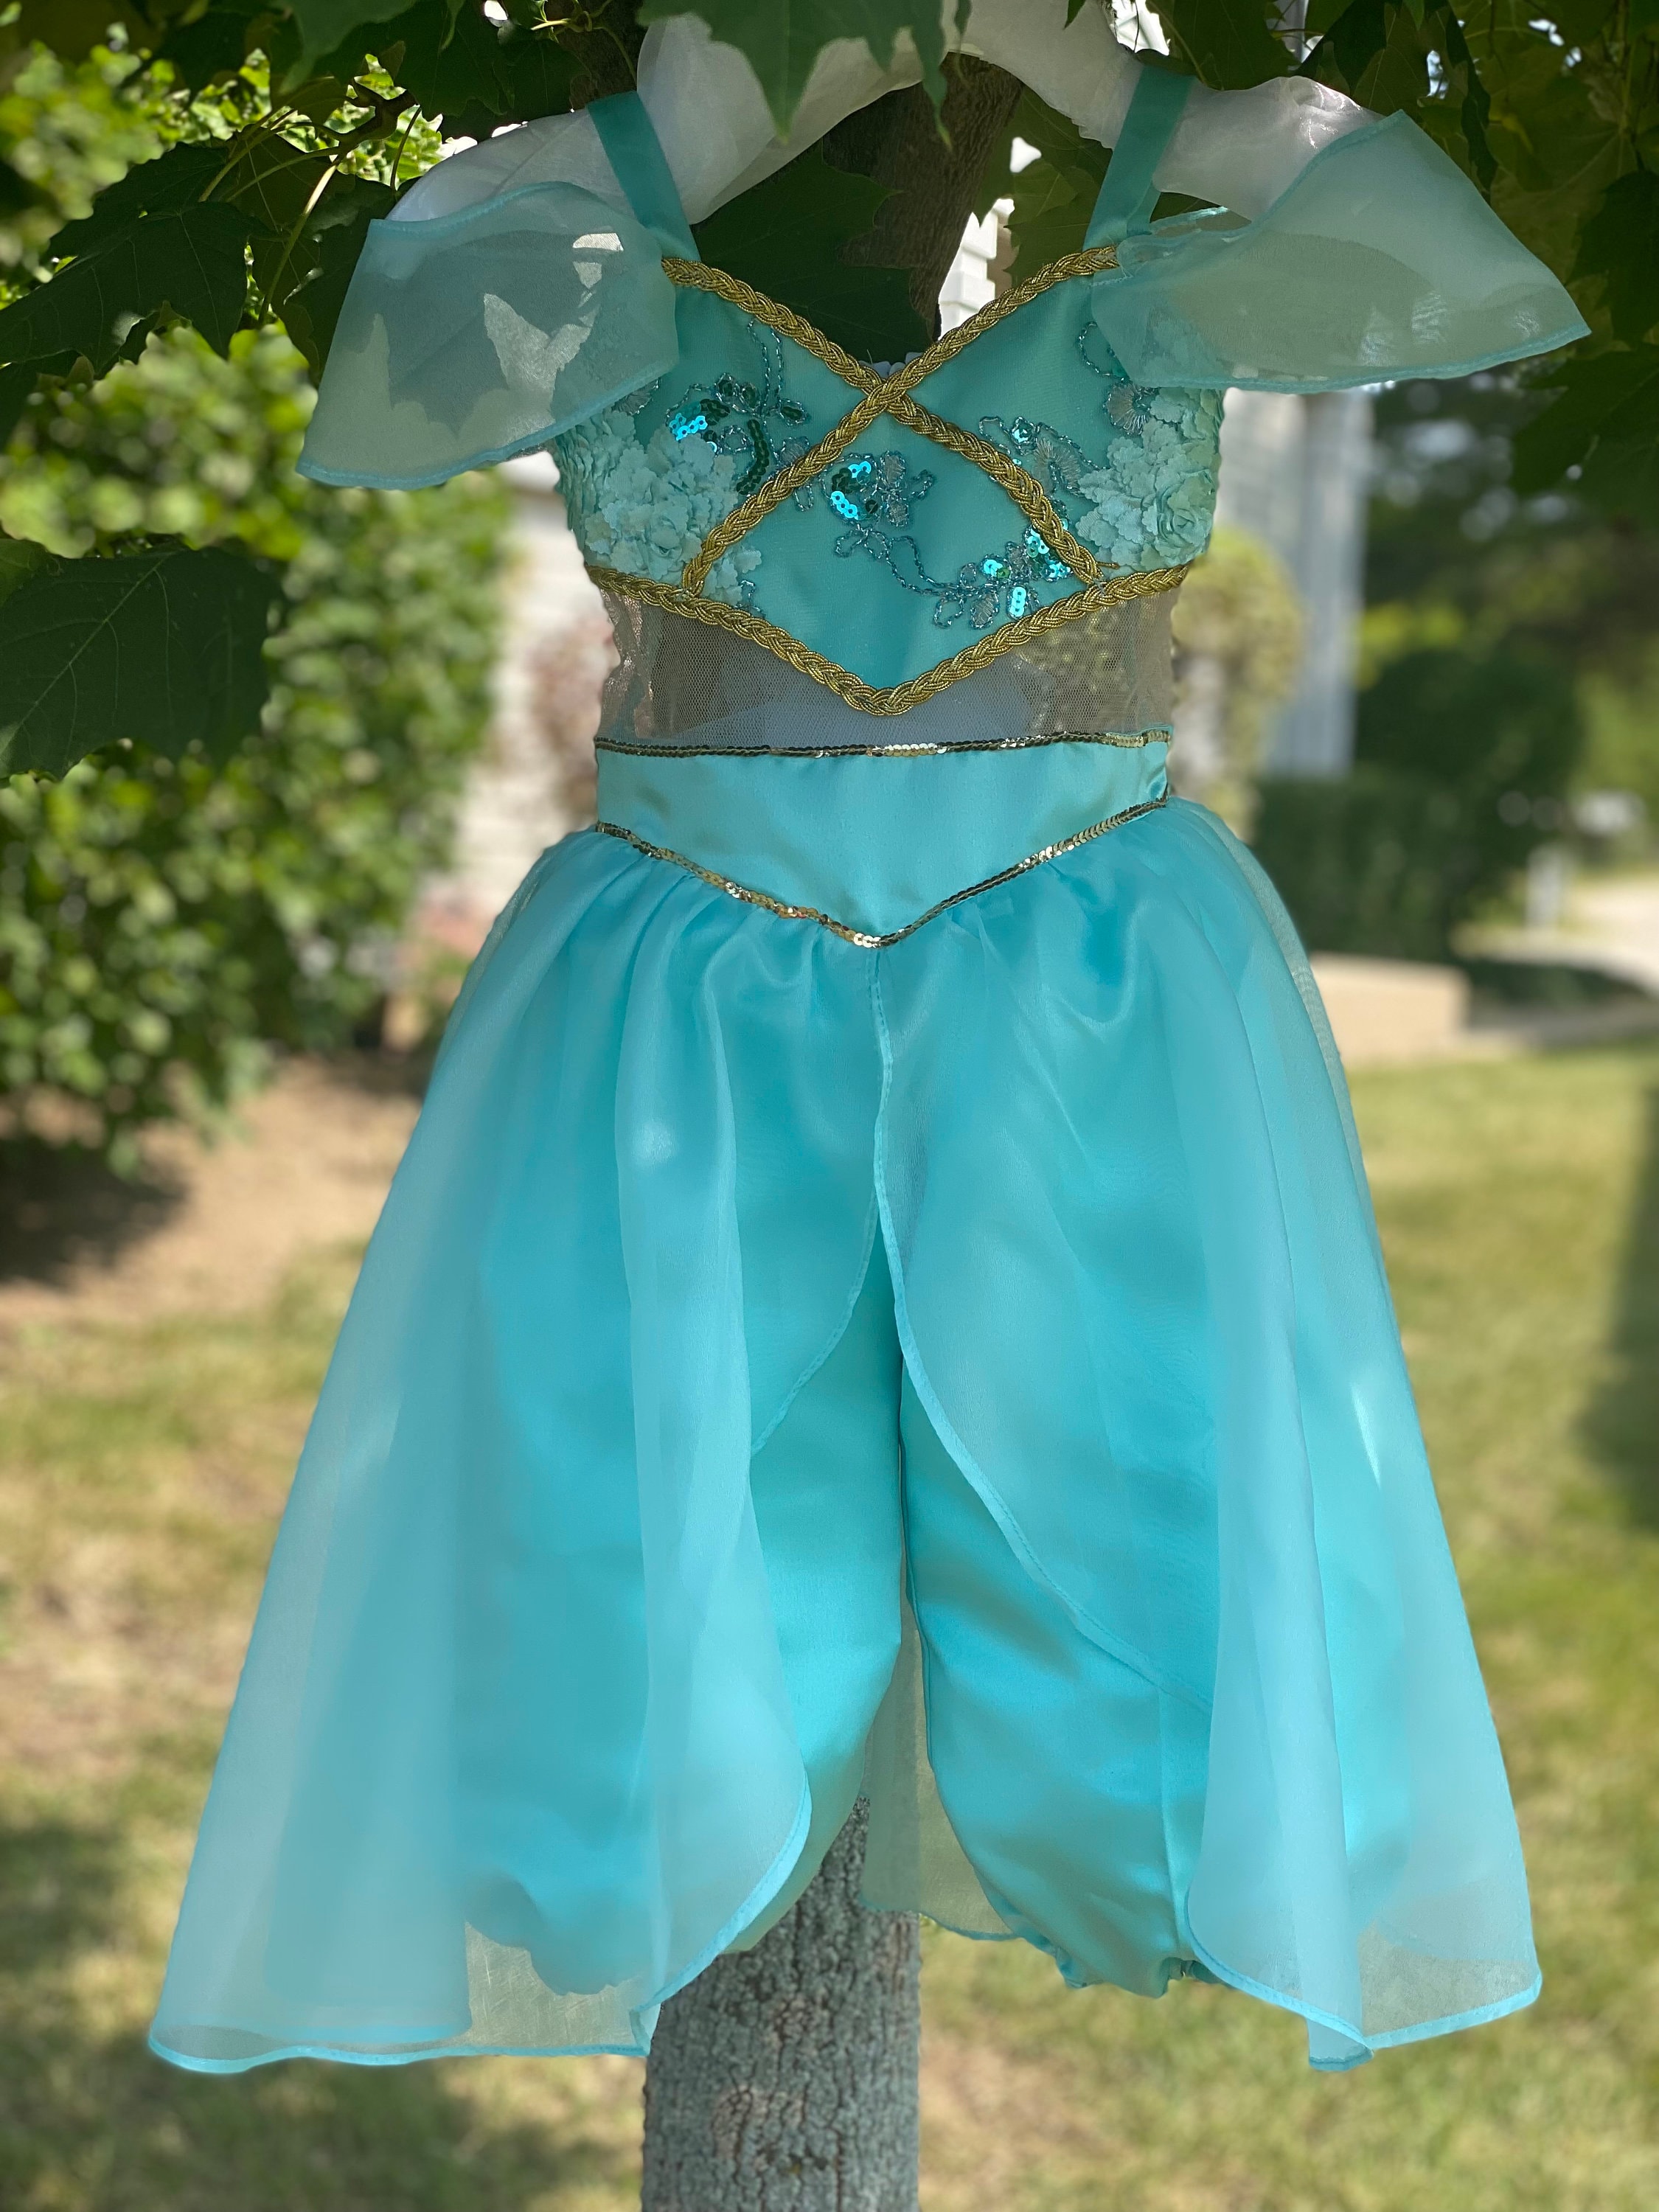 Aladdin Deluxe Princess Jasmine Costume - CosplayFTW